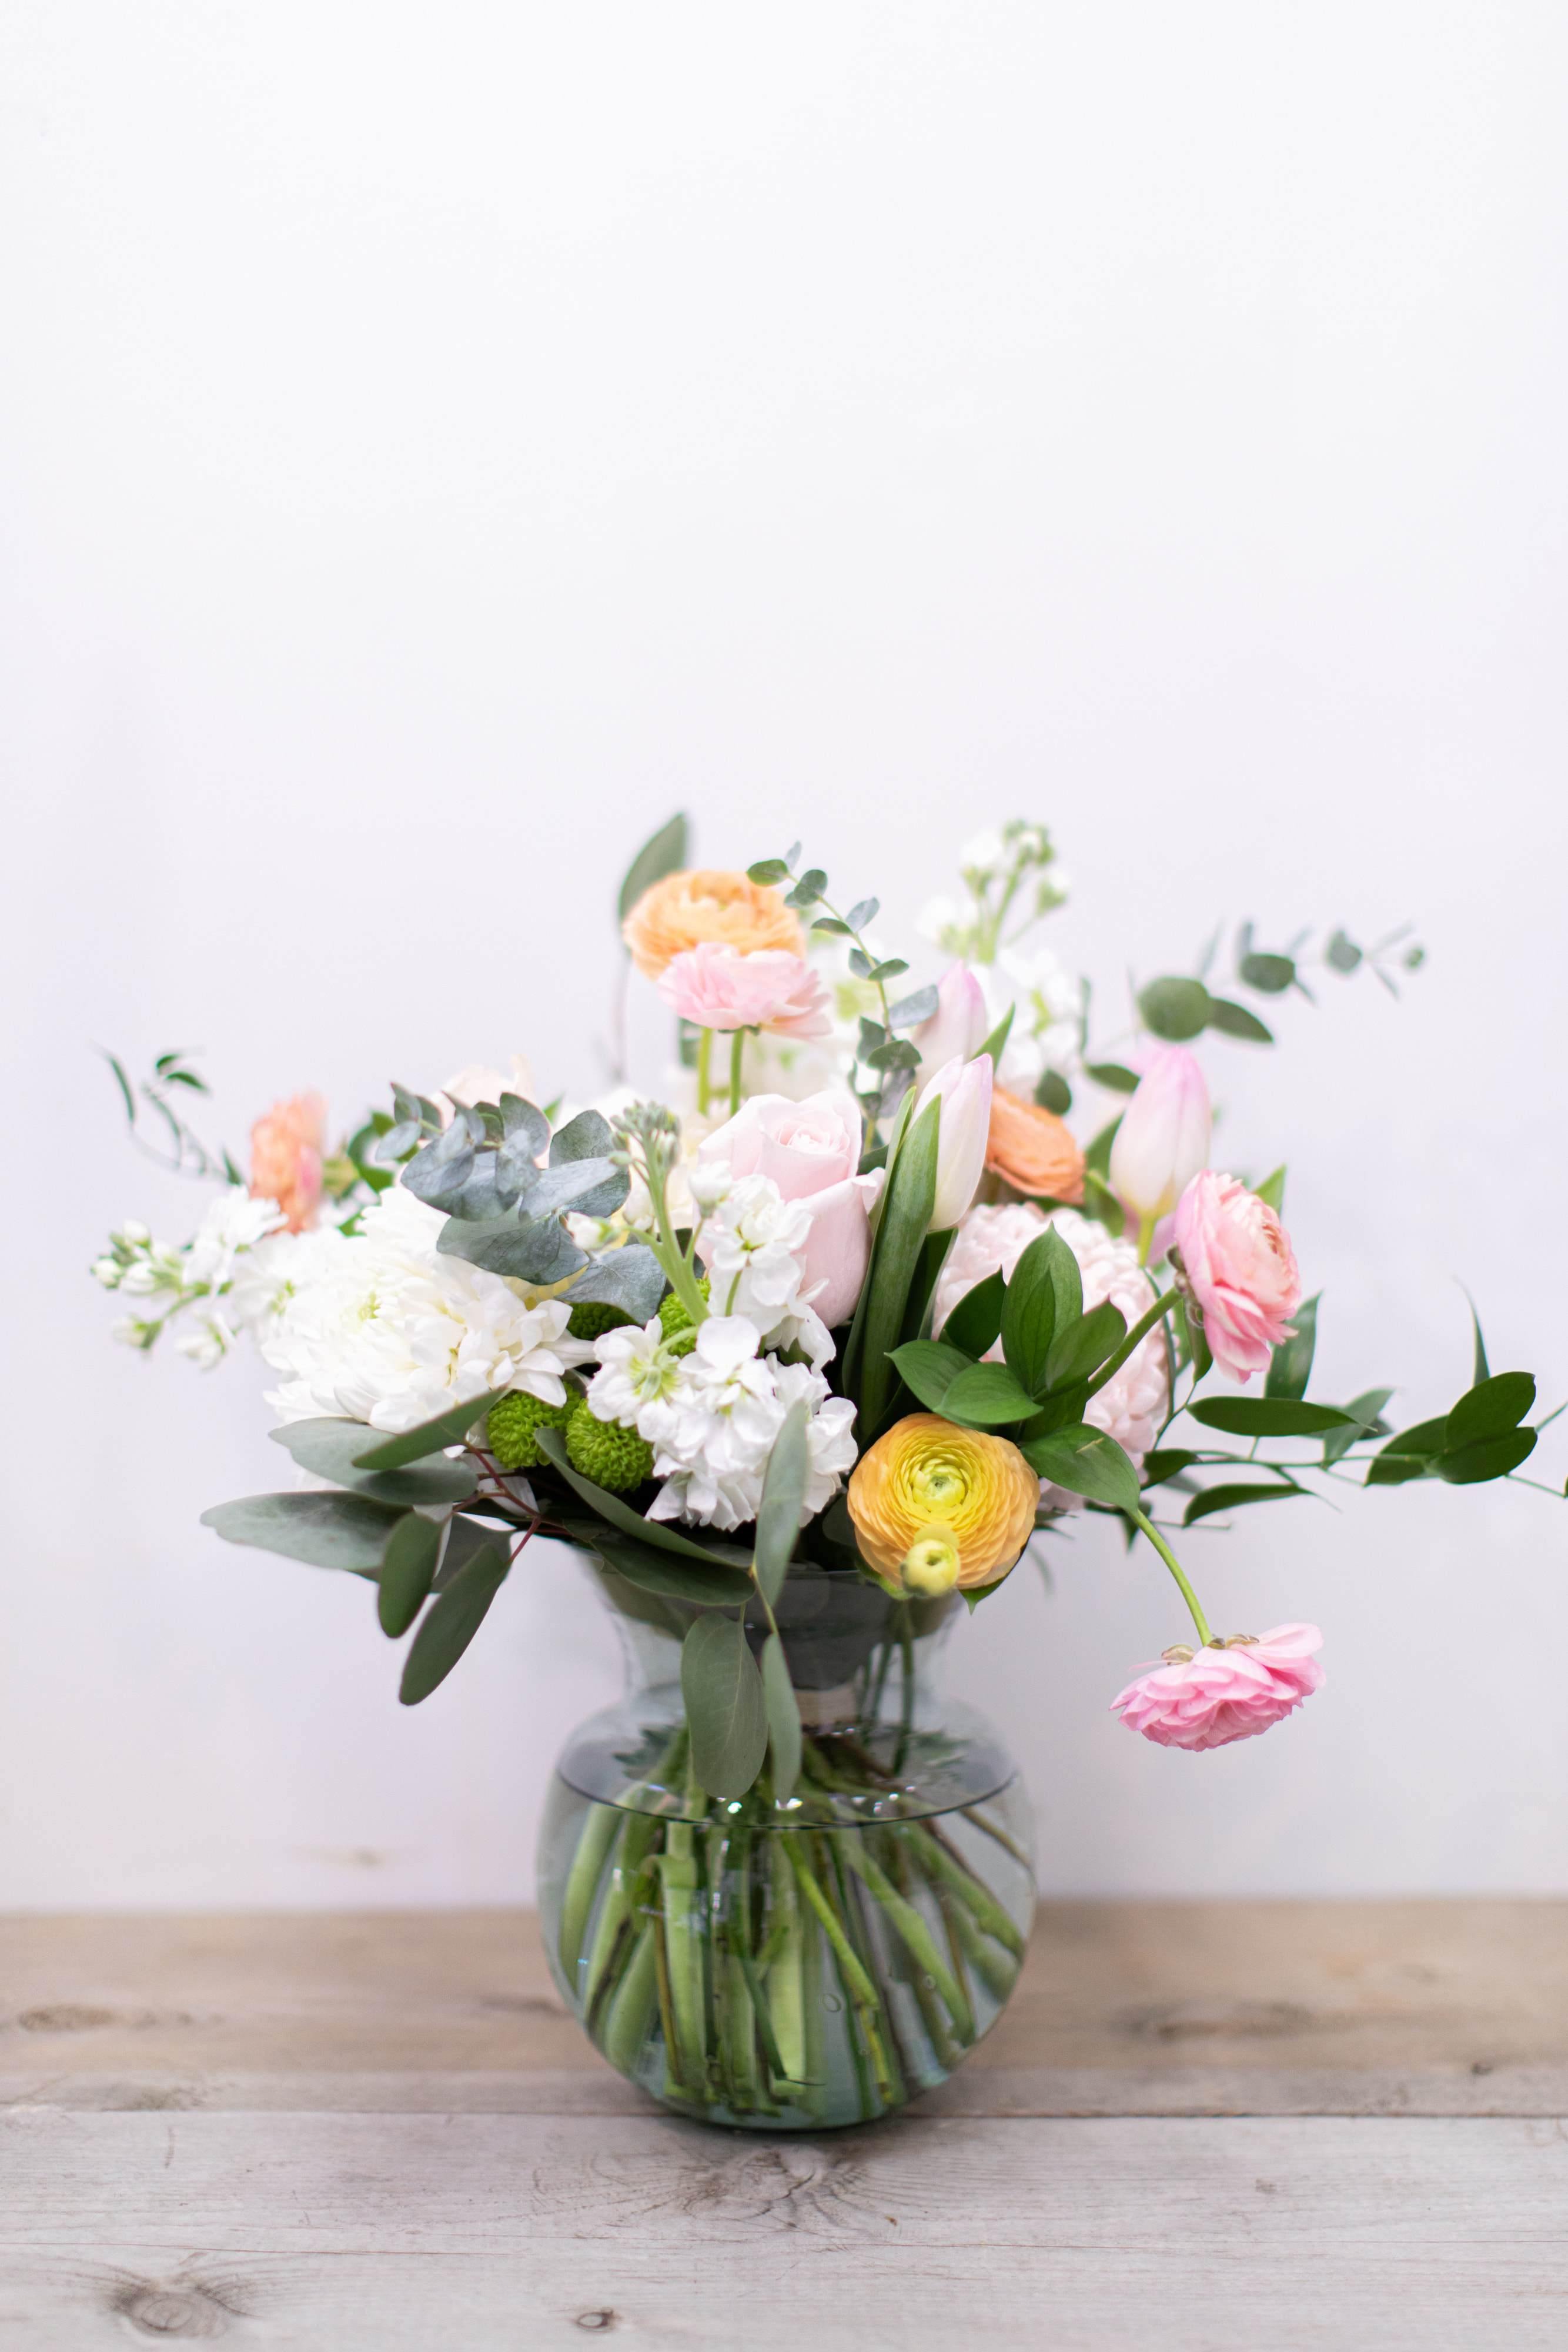 Greeting Bouquet - Toronto Flower Gallery